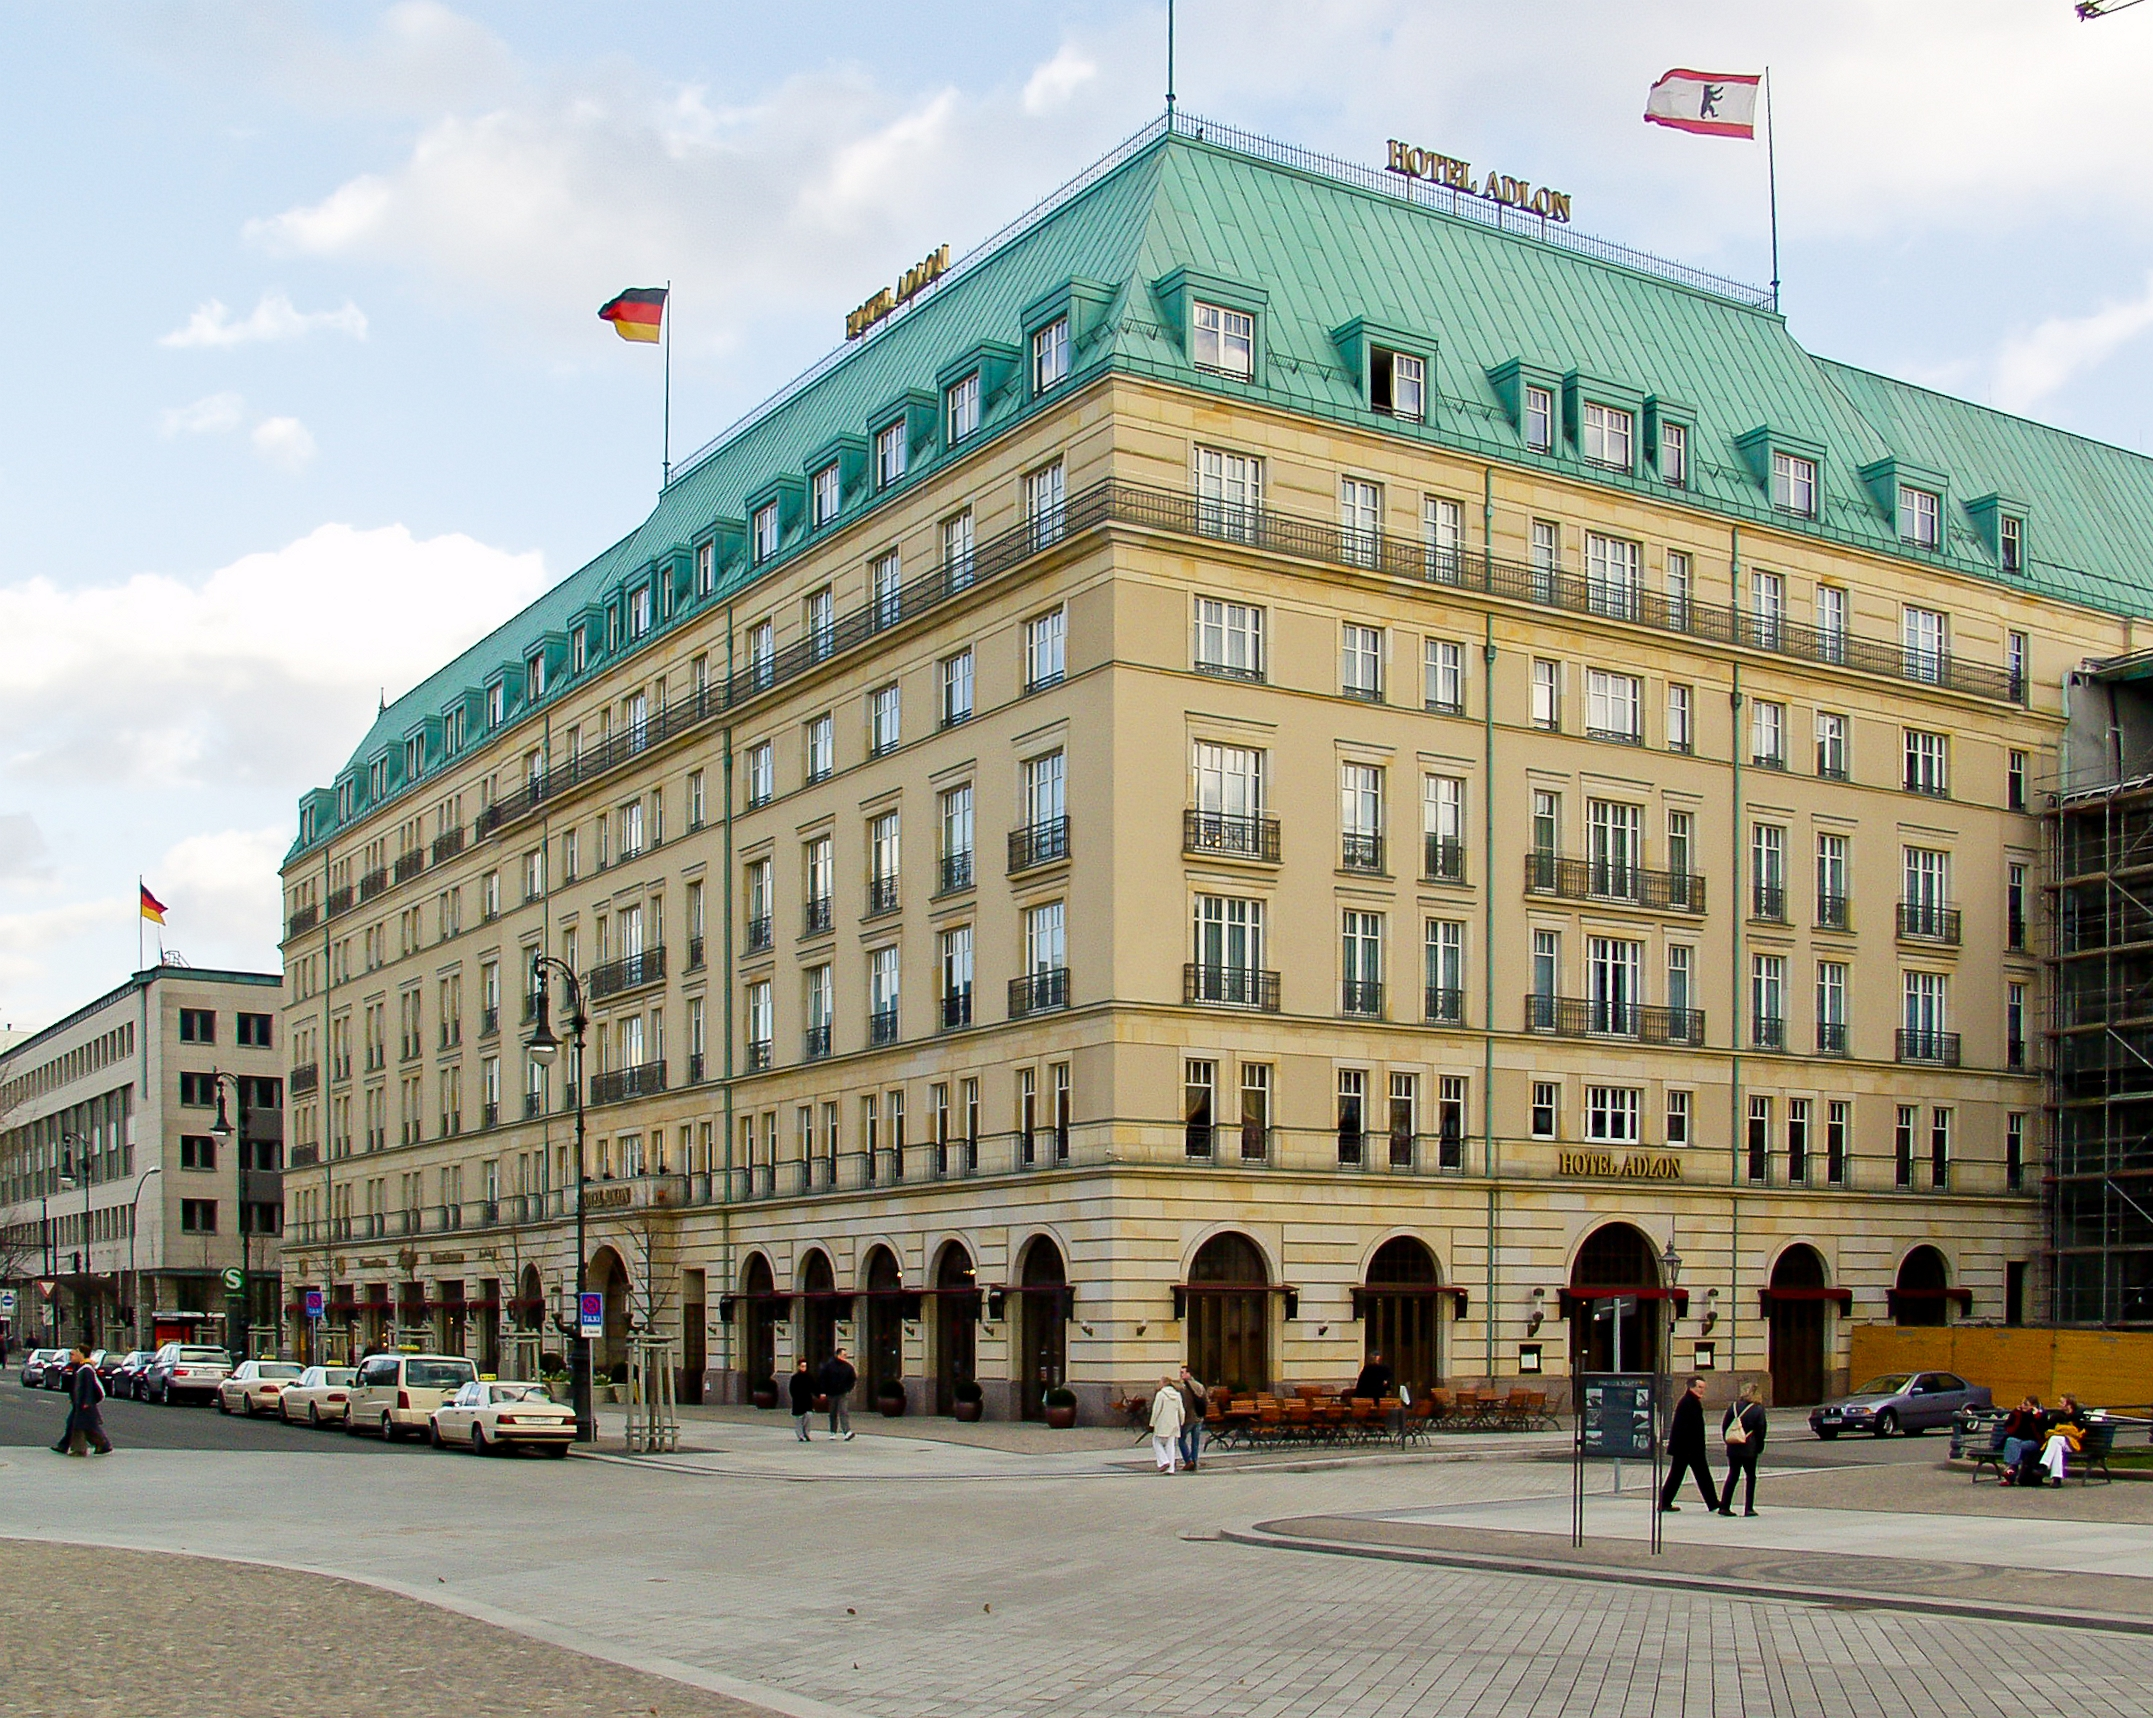 MYCHAUFFEUR Hotel Adlon Kempinski Berlin